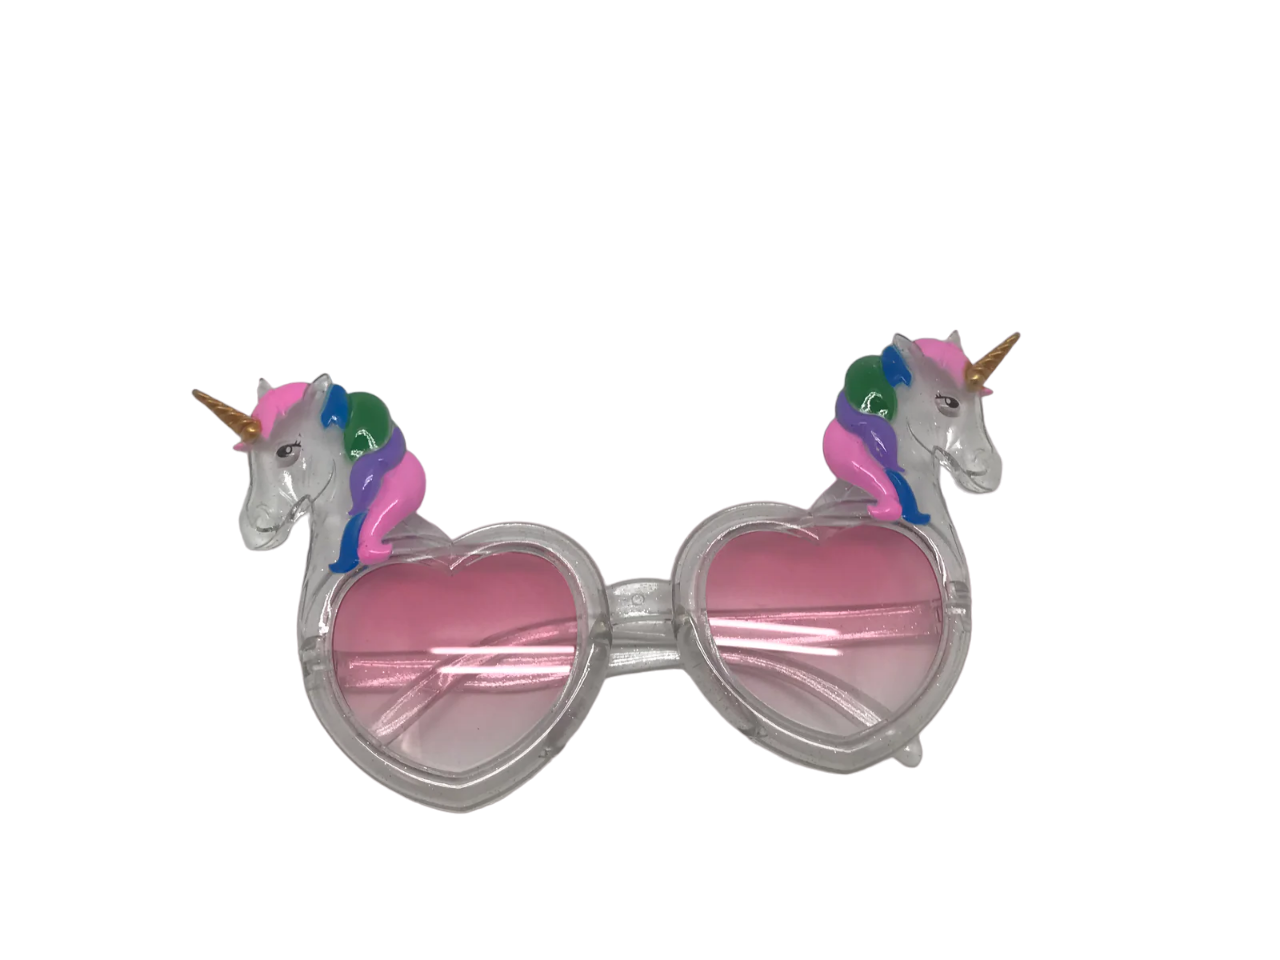 Heart Shaped Unicorn Sunglasses